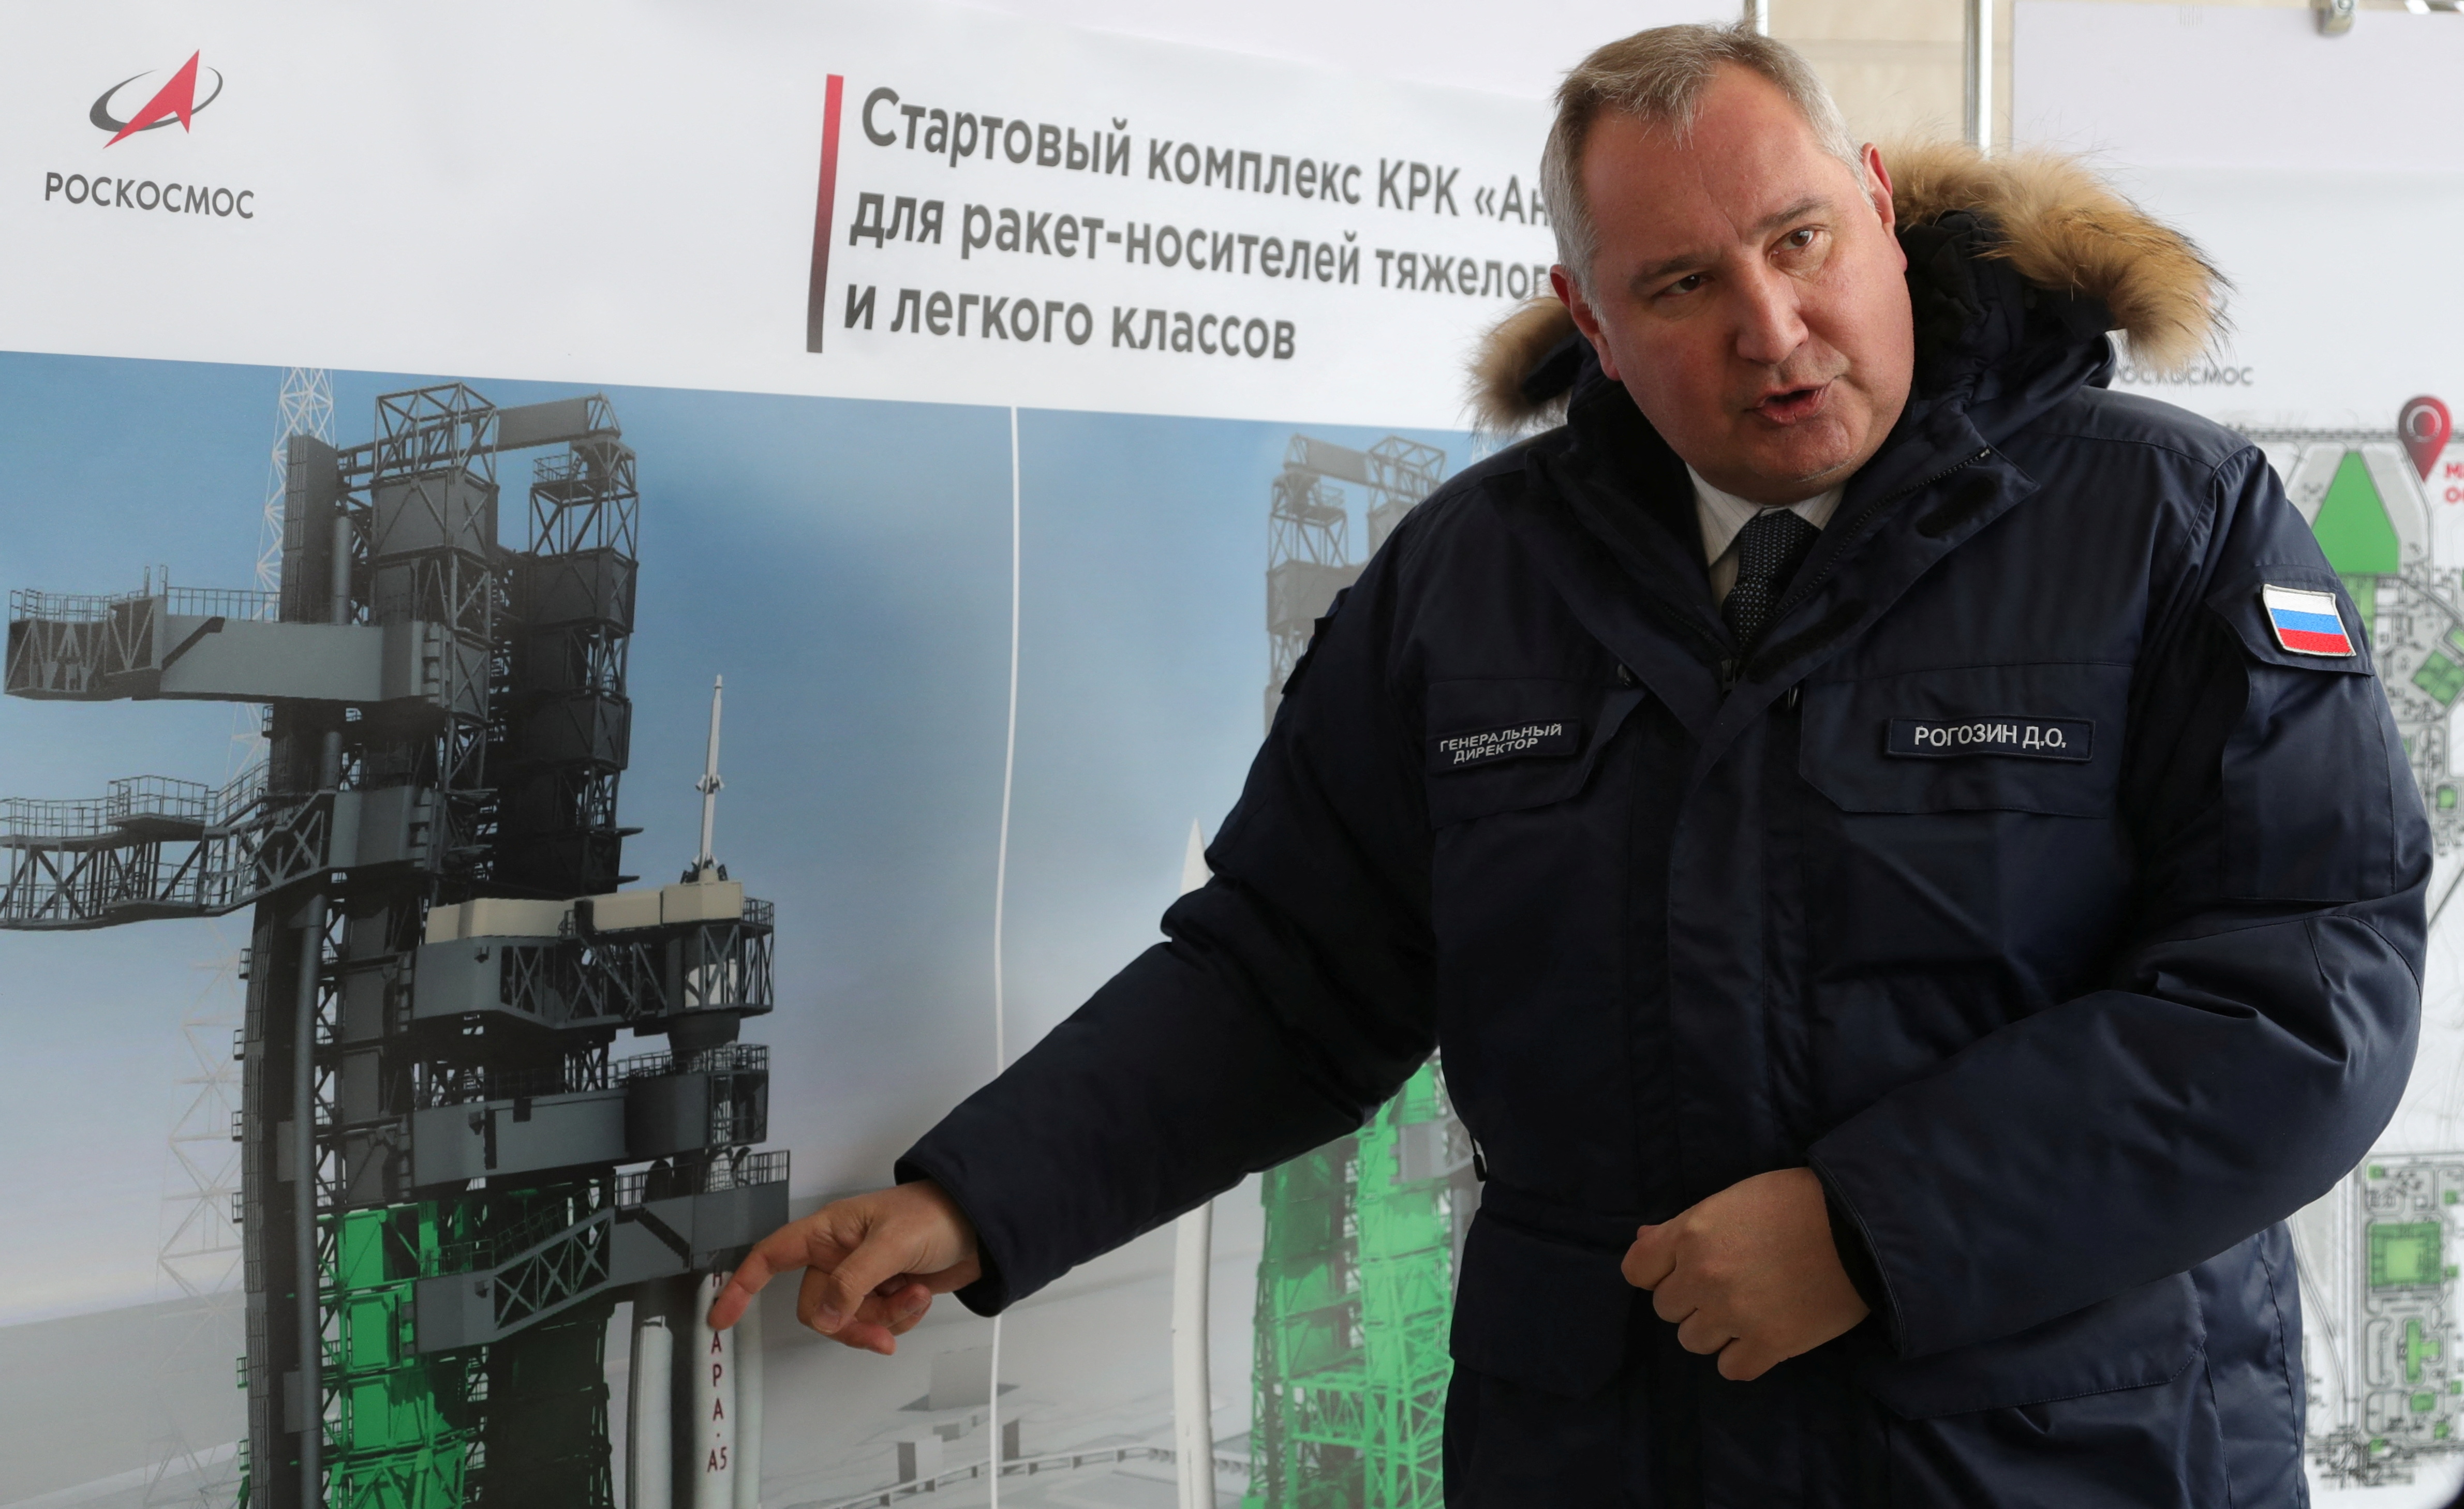 Dmitry Rogozin (Reuters)